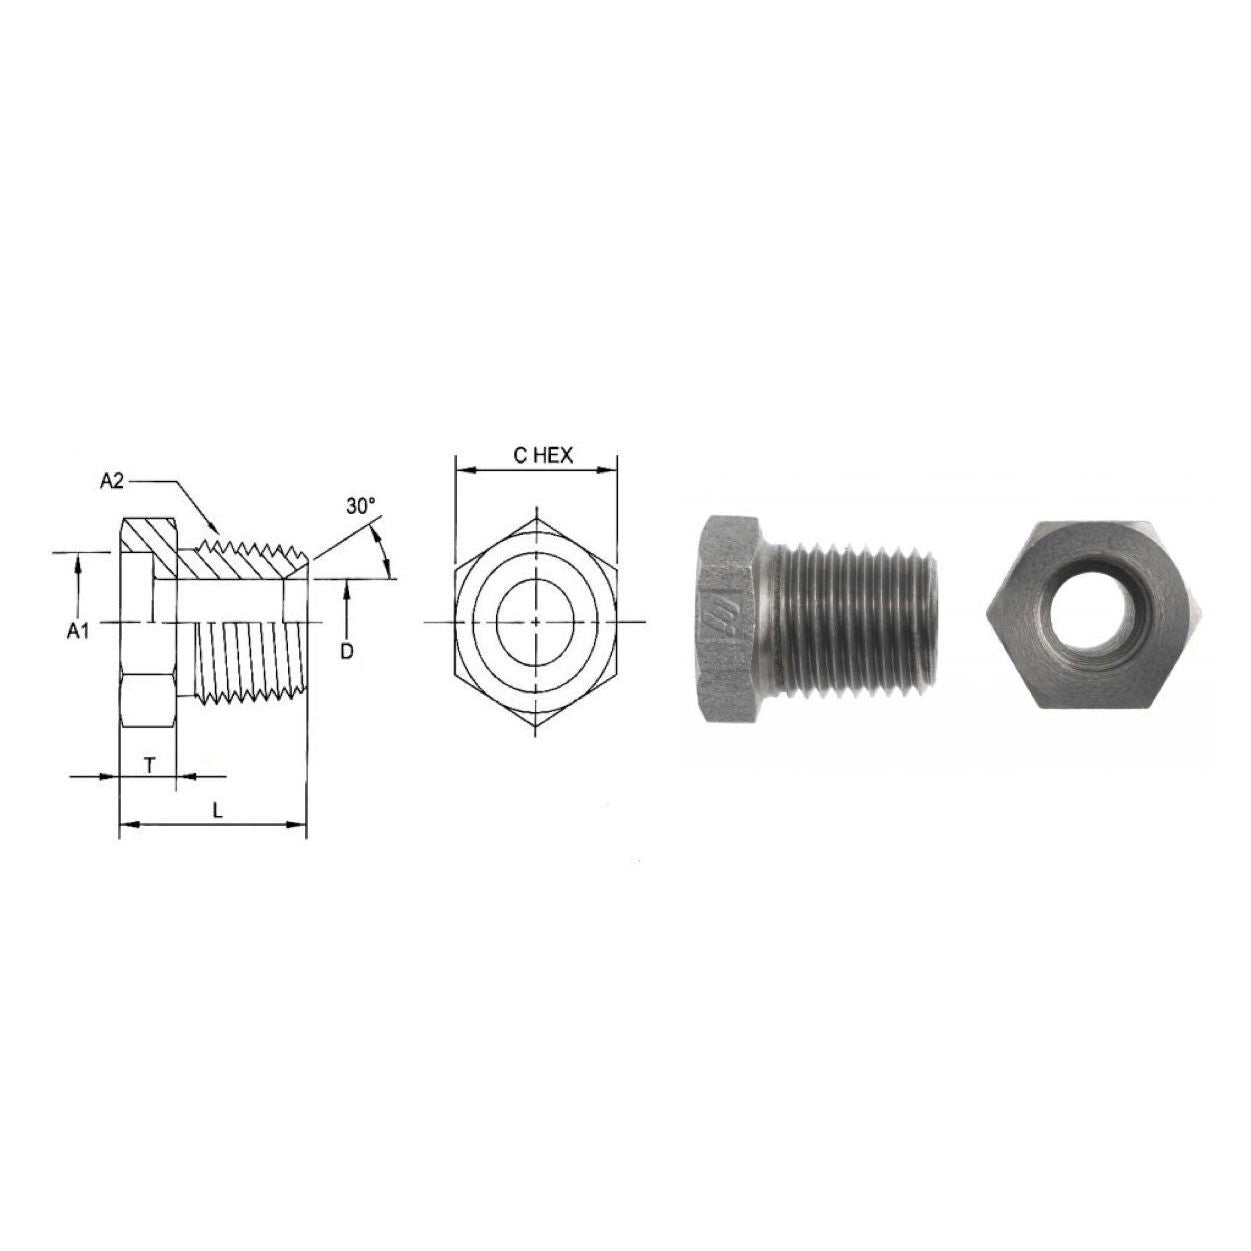 0404-12-12 : OneHydraulics 0.75 (3/4) Bore x 0.75 (3/4) Male NPT Straight Plug, Steel